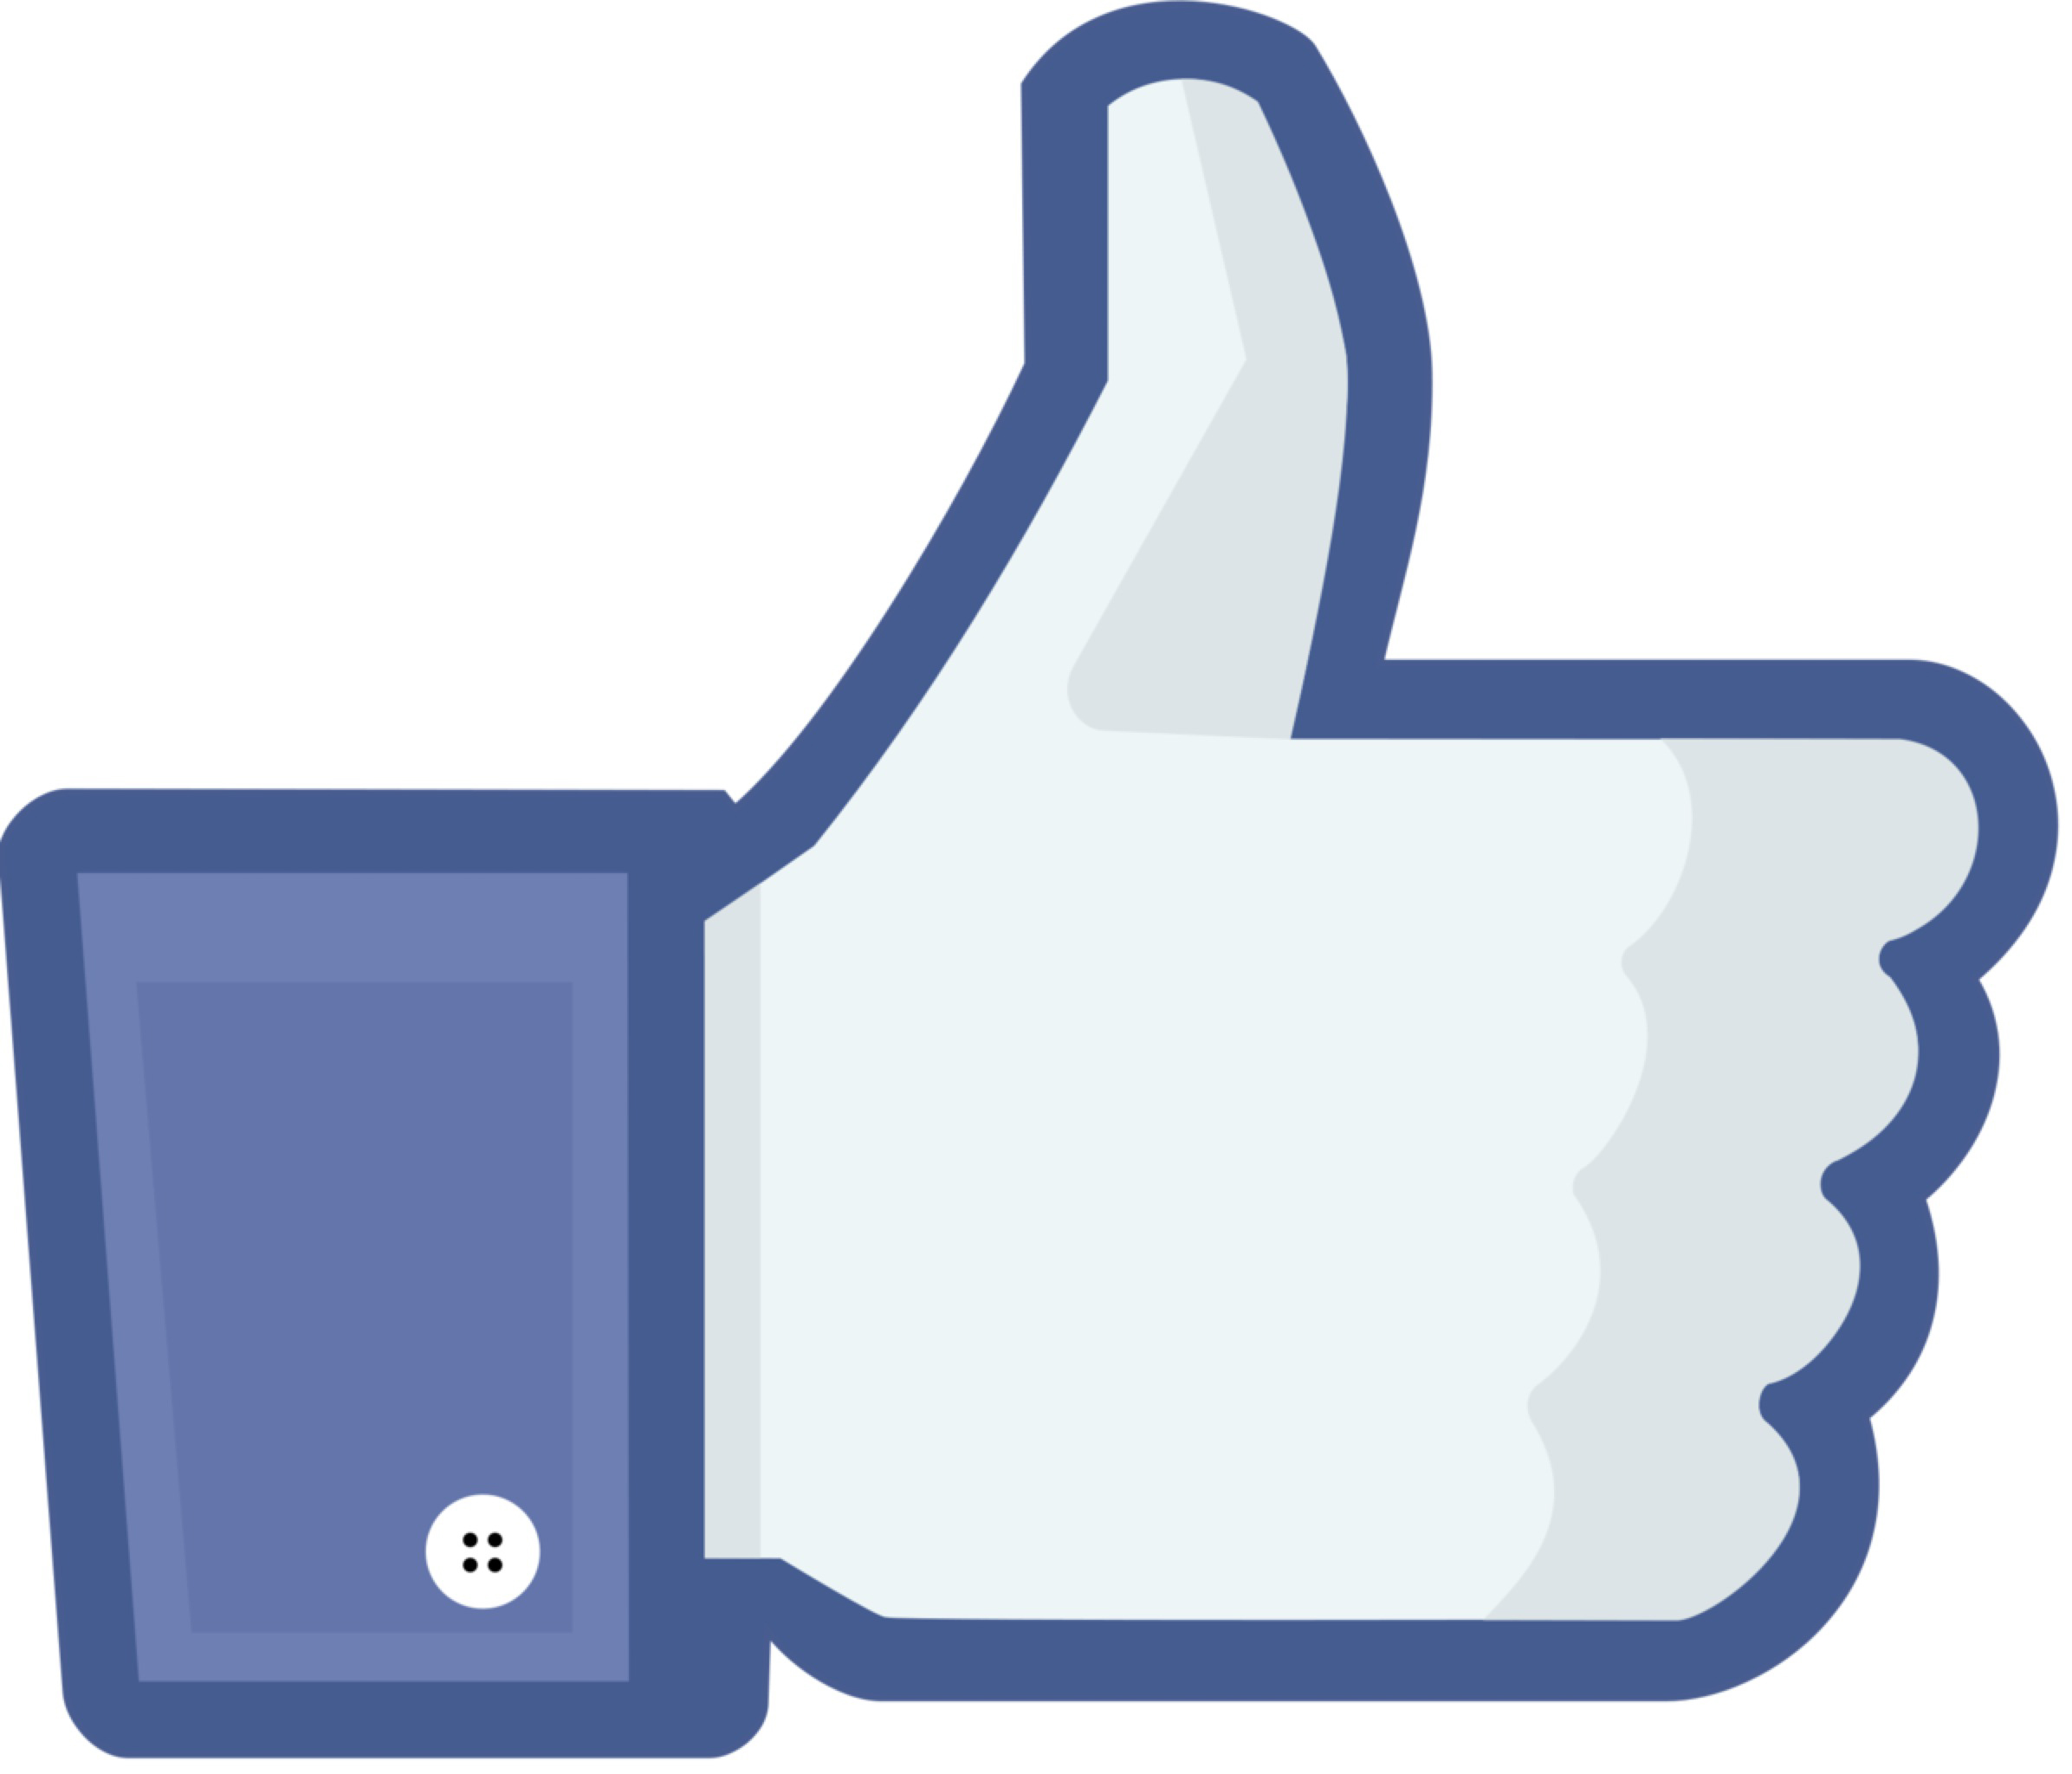 Facebook logo vector free download clipart 2